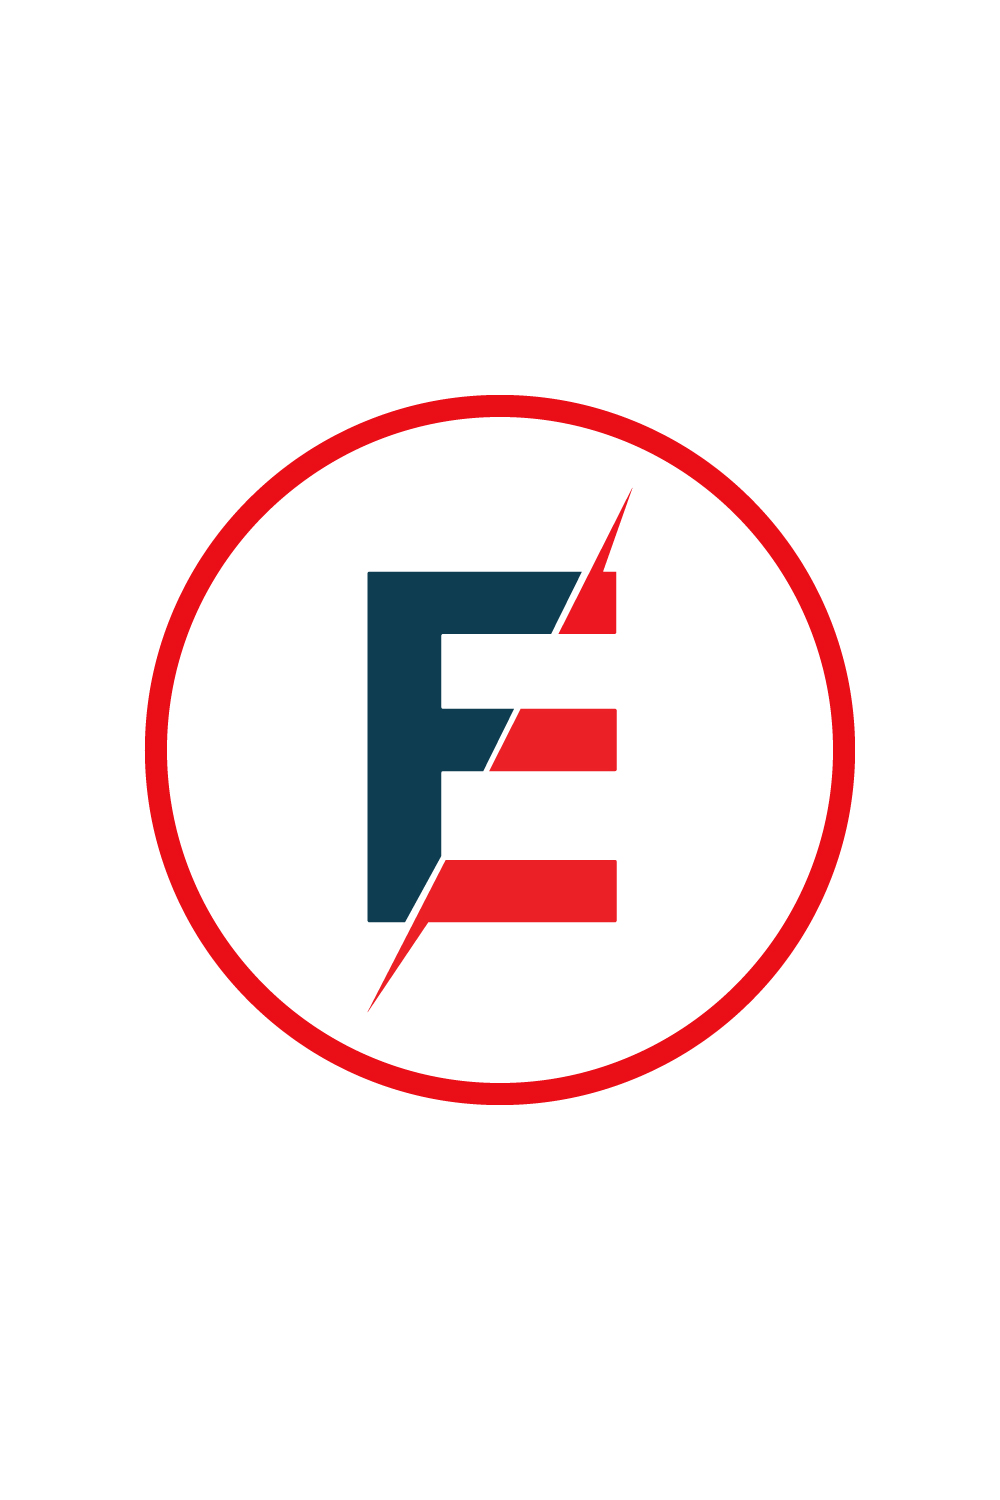 Initials E letters logo design vector icon E circle logo design pinterest preview image.